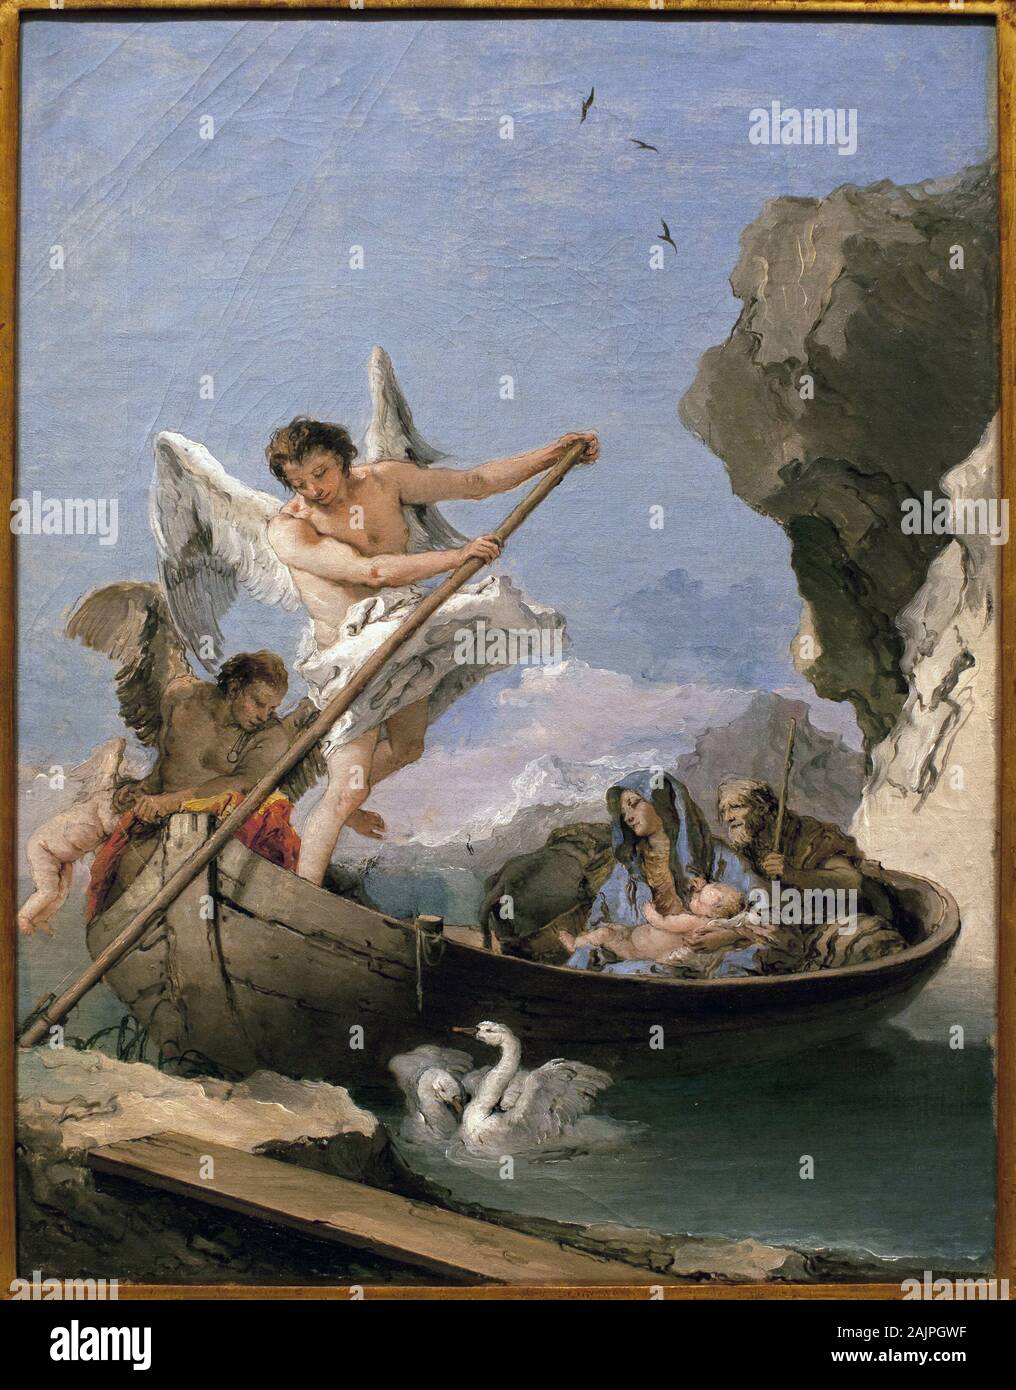 La fuite en Egypte - Peinture de Giambattista Tiepolo (1696-1770), huile sur toile, 1765-1770 (Flight into Egypt, by Giambattista Tiepolo, oil on canv Stock Photo